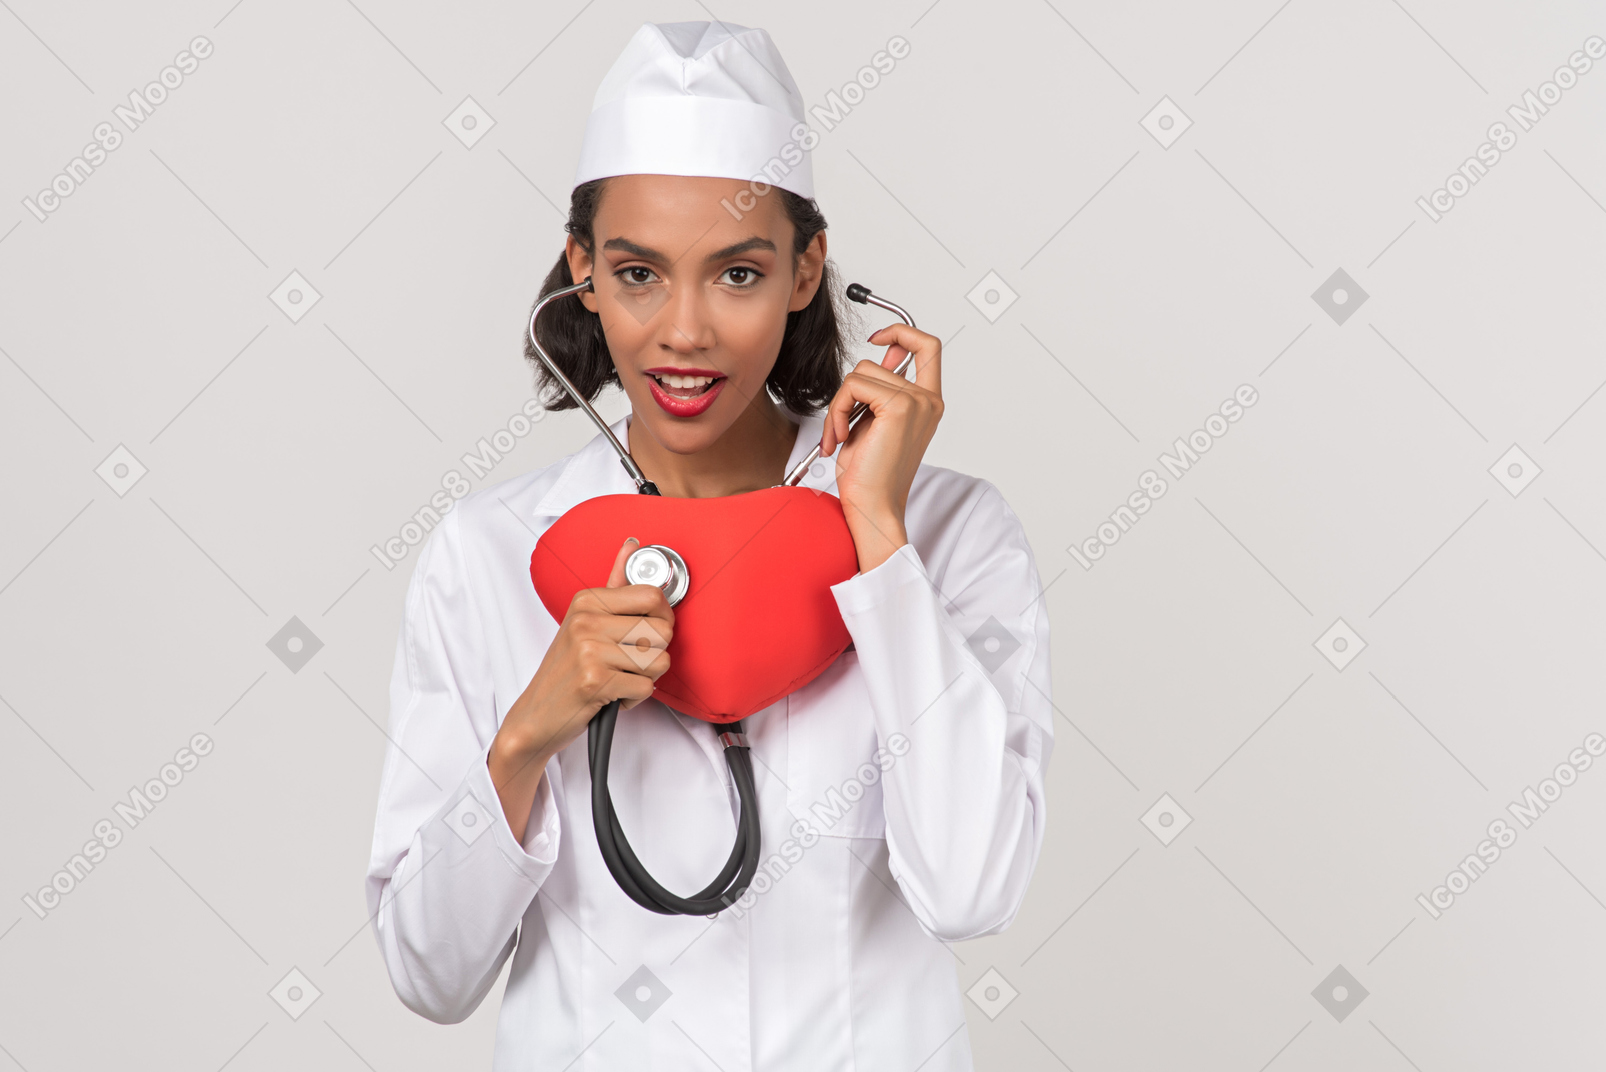 Are you ready for a cardiac examination?